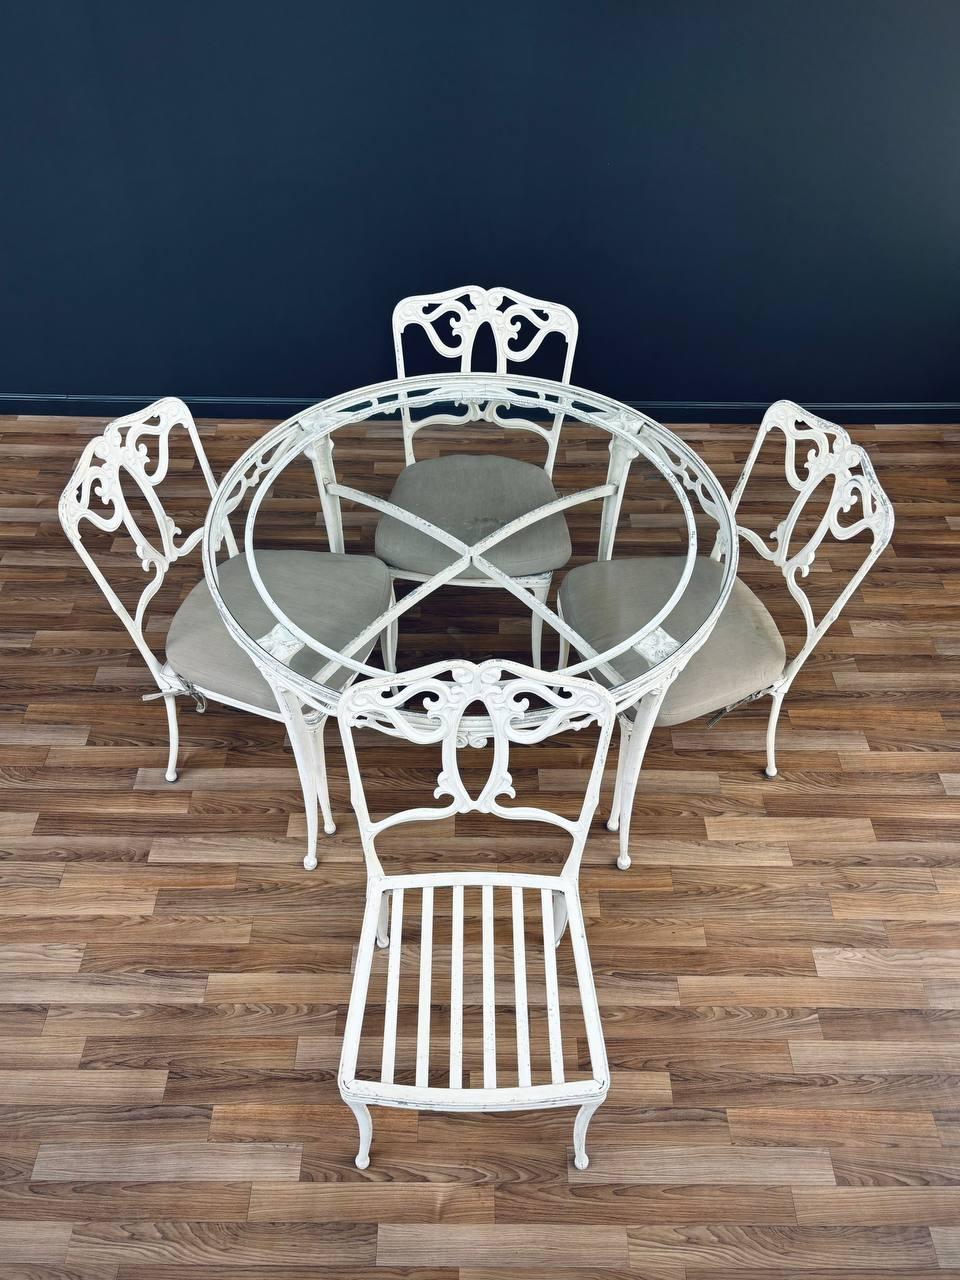 Dimensions: 
Table:
29.25”H x 42.25”W x 42.25”D
Chairs:
34.50”H x 18.75”W x 22.25” D
Seat Height 19